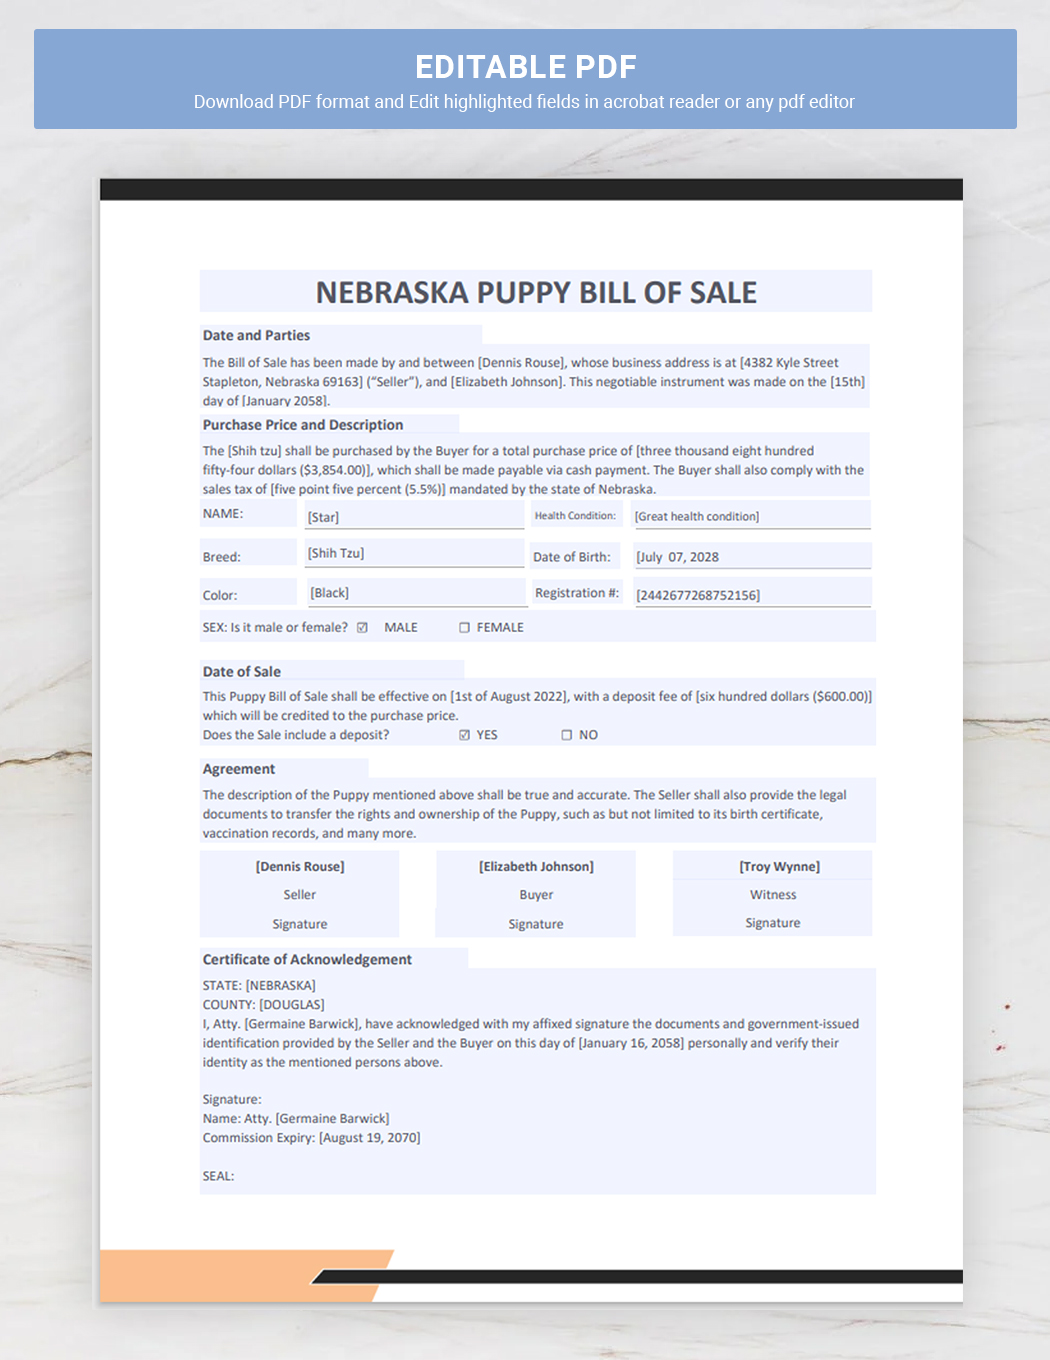 Nebraska Dog / Puppy Bill of Sale Form Template